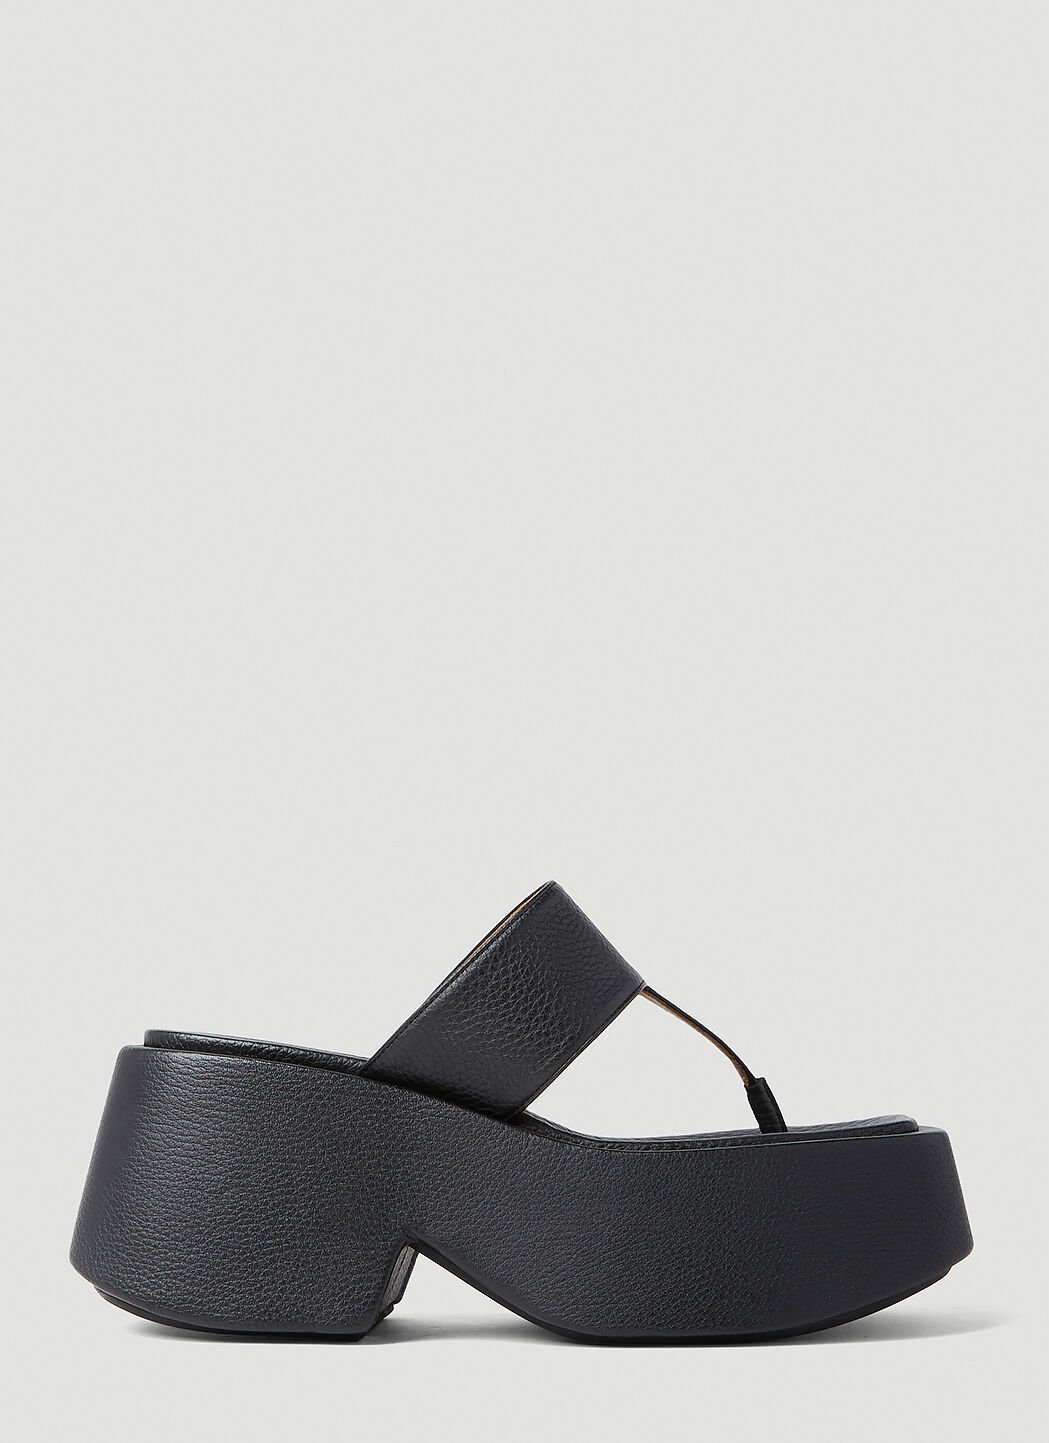 Balenciaga Zeppo Platform Sandals 黑色 bal0252062